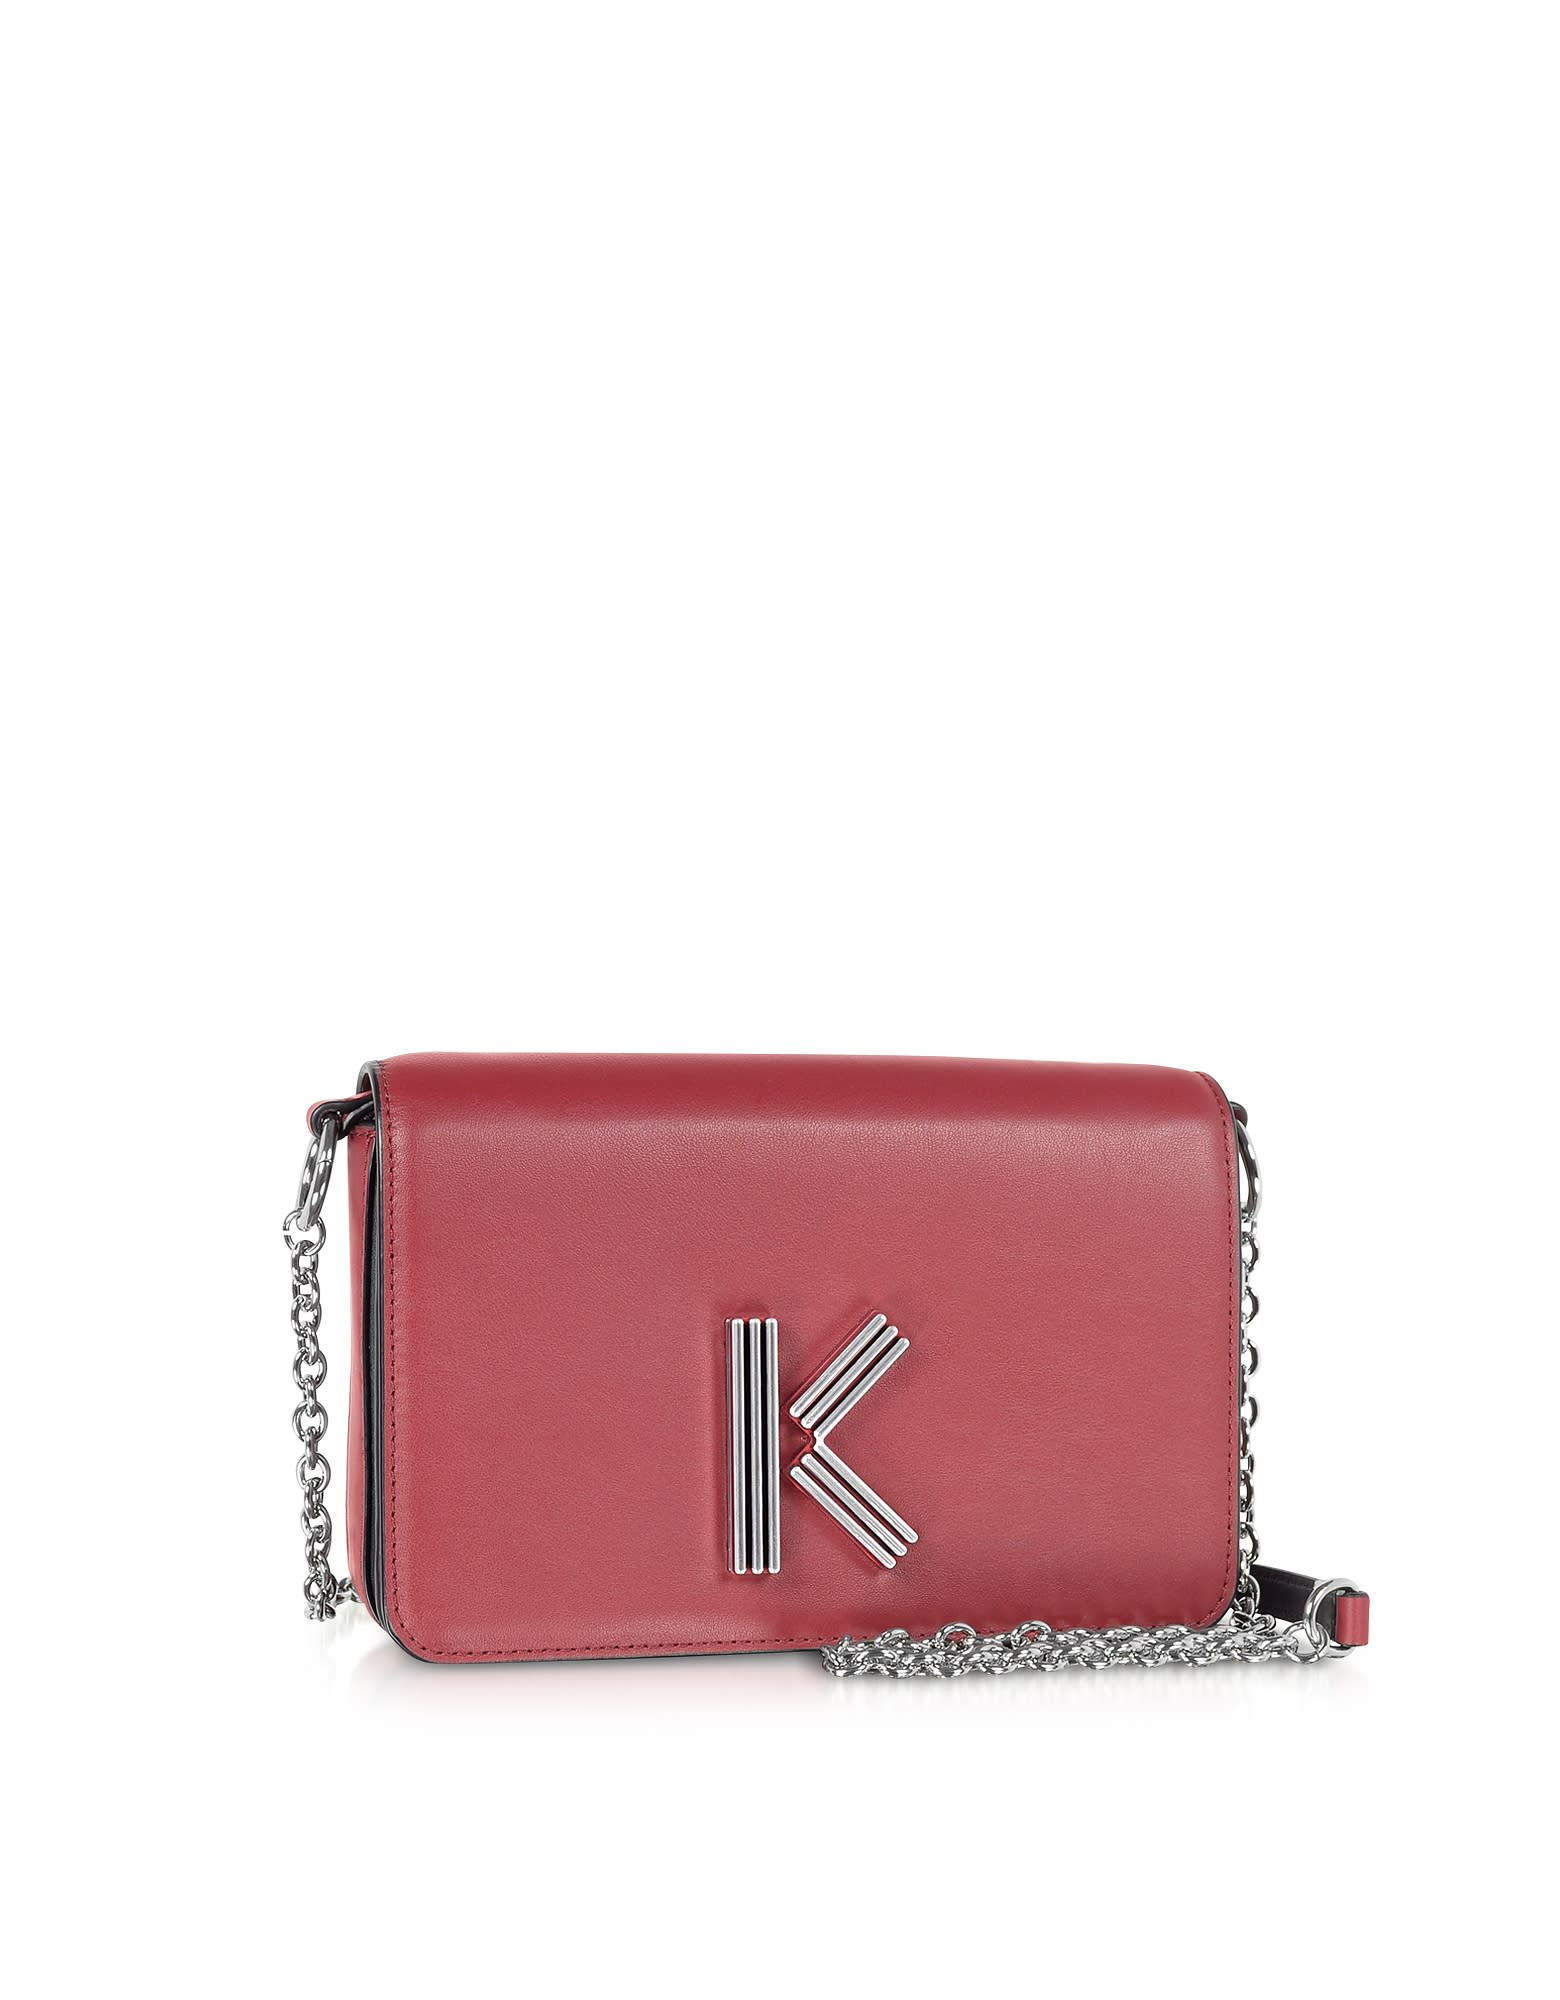 kenzo purse red